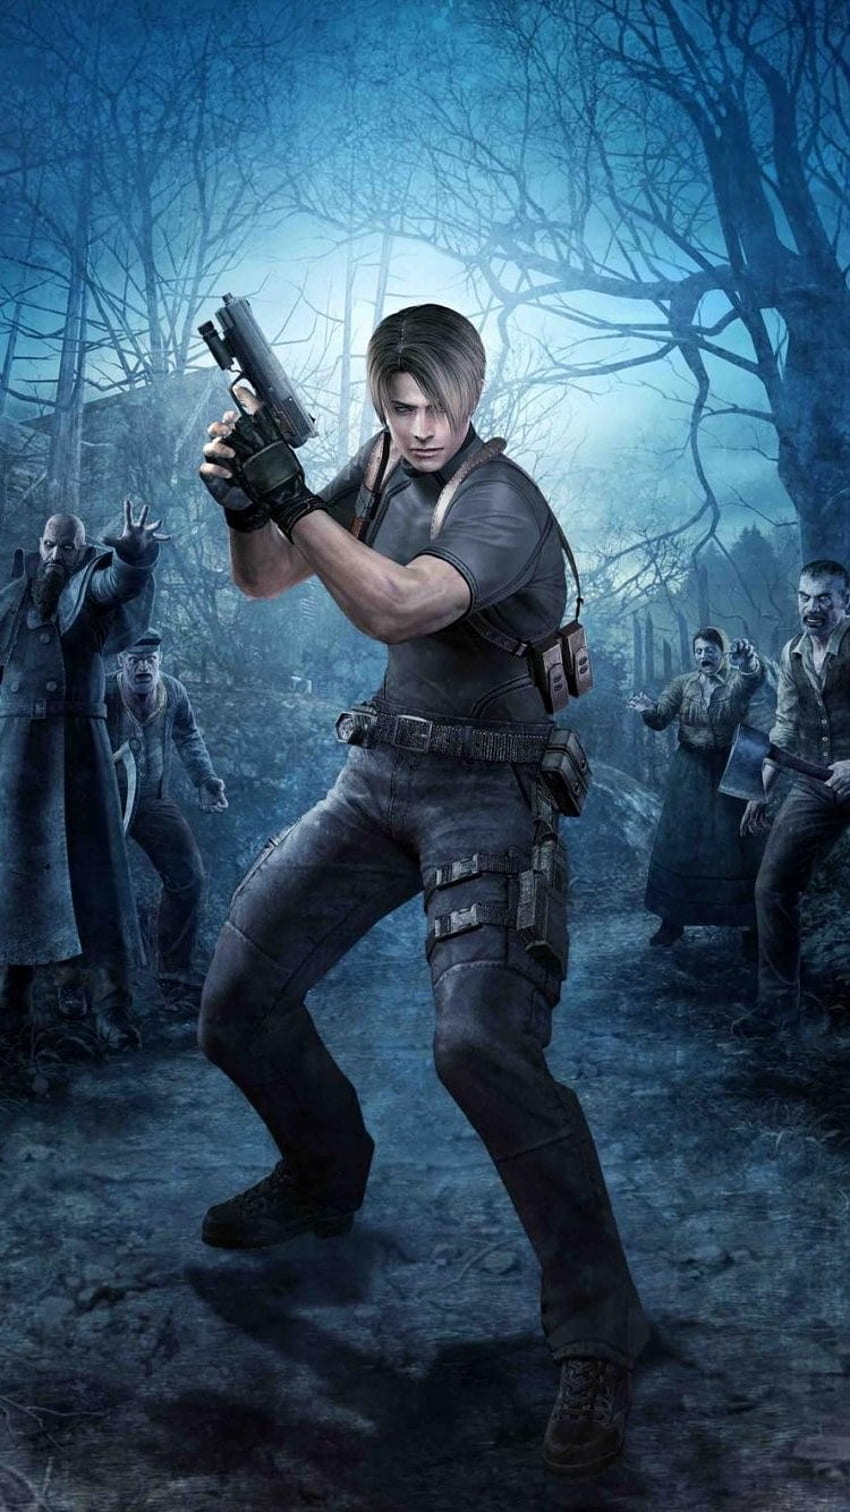 Resident Evil iPhone, Resident Evil 4 iPhone HD phone wallpaper